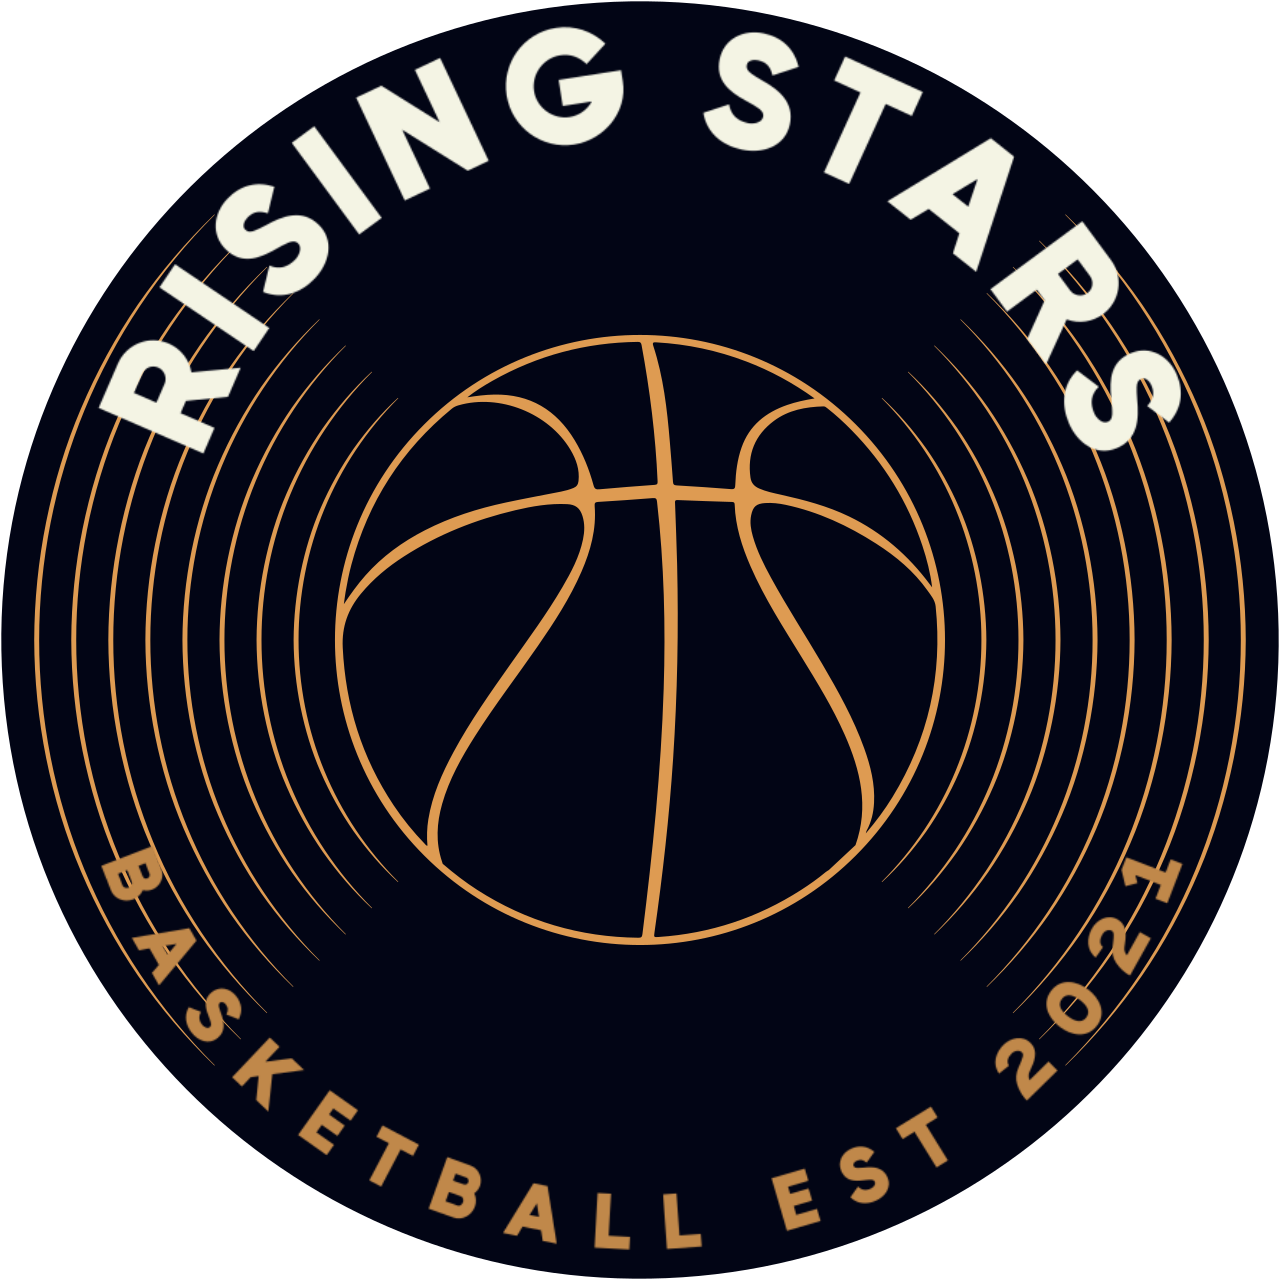 RISING STARS's web page